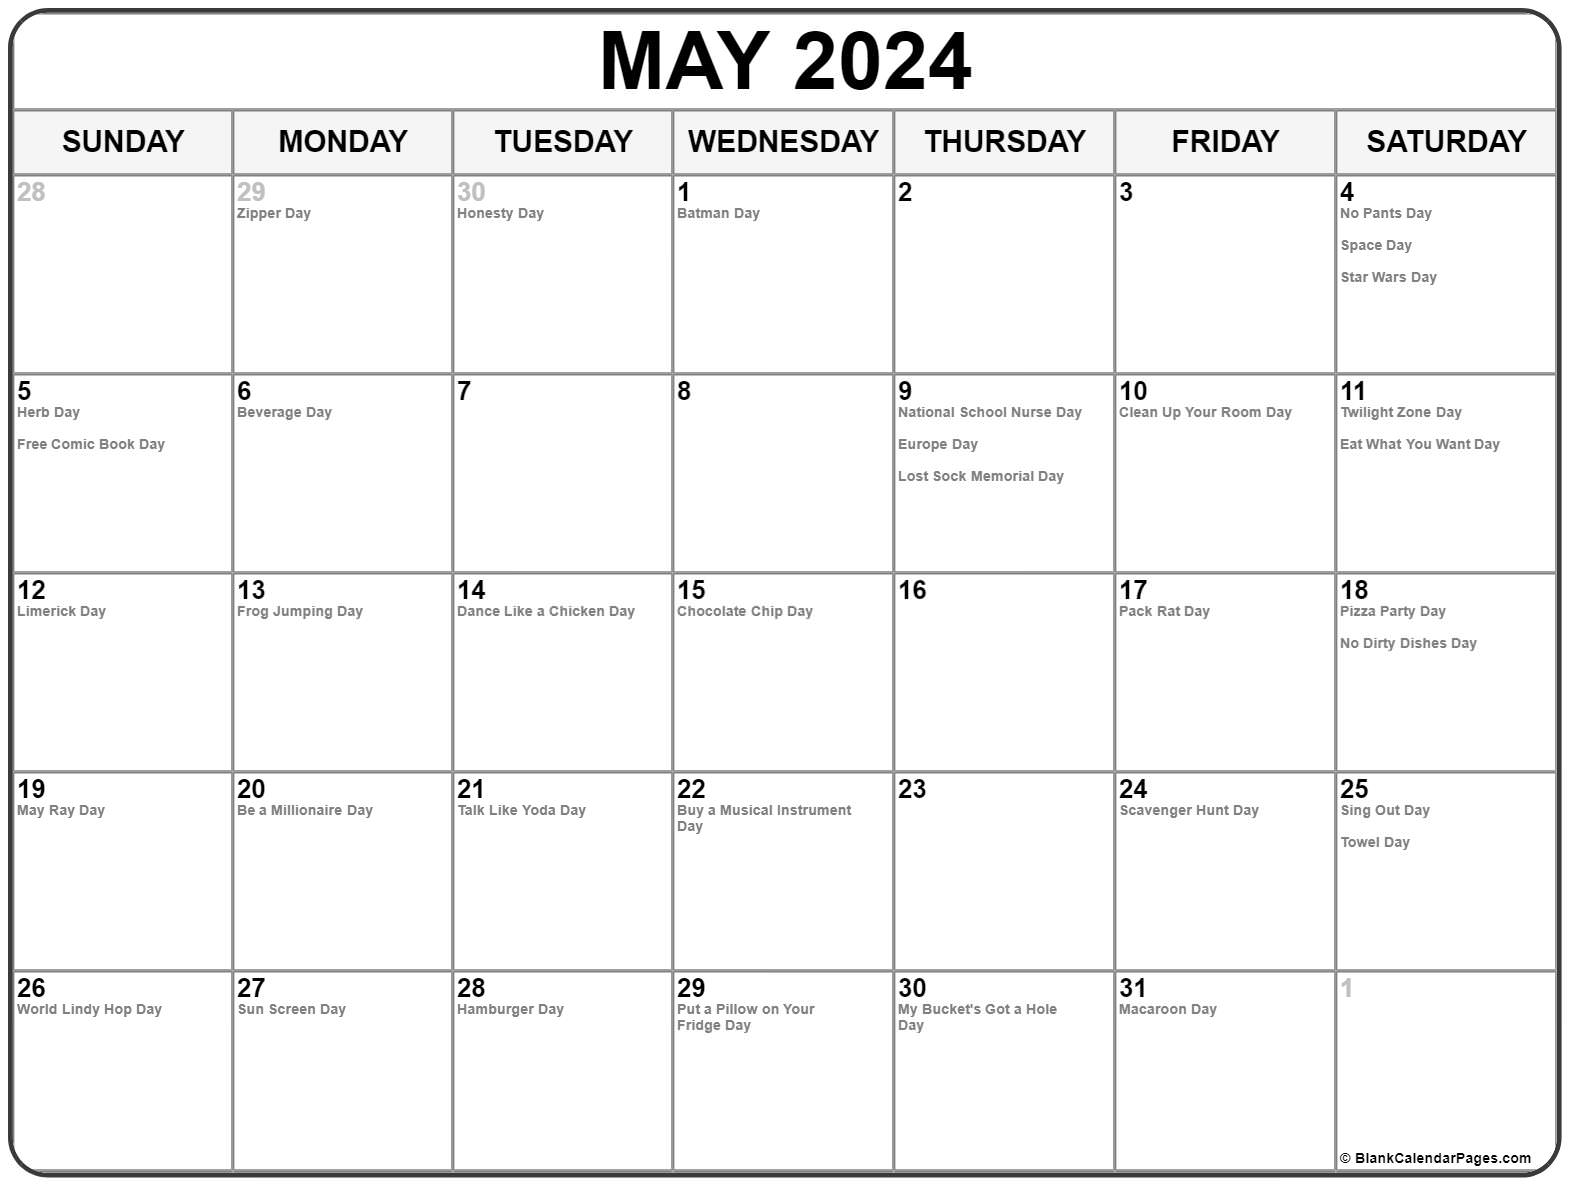 may-2023-calendar-with-us-holidays-get-calendar-2023-update